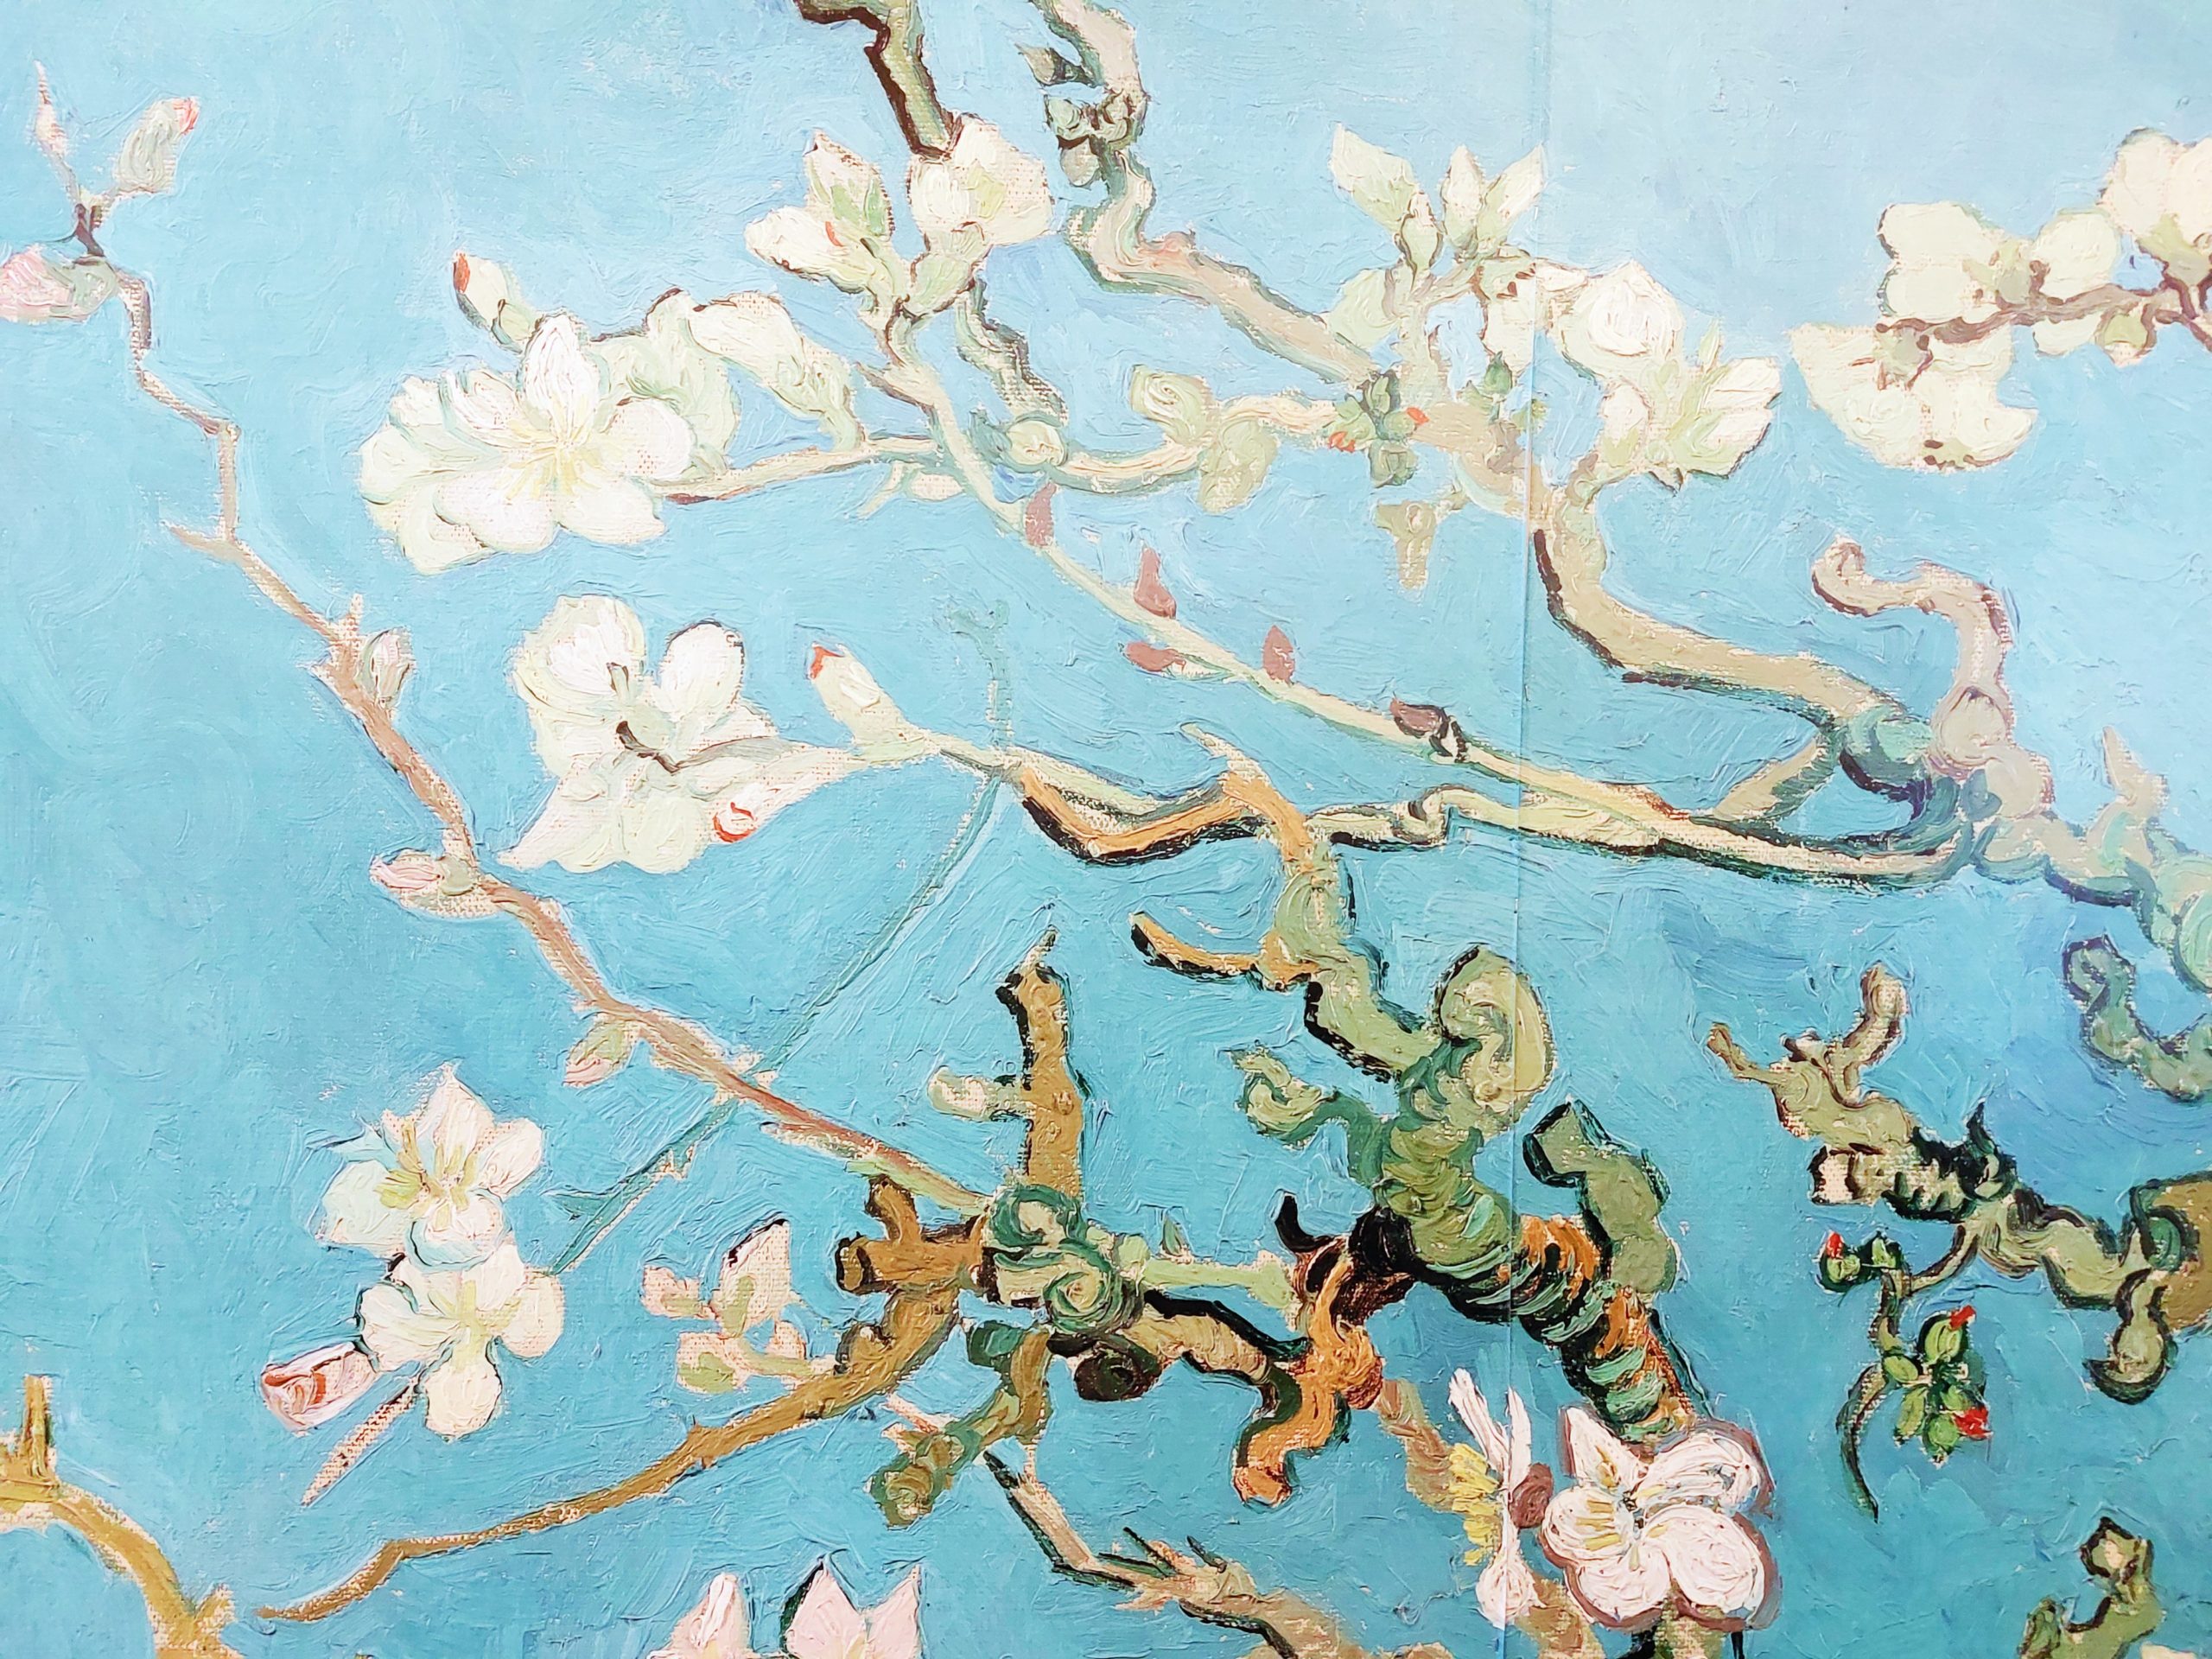 <img src="almond.jpg" alt="almond blossom blue wall Van Gogh"/> 